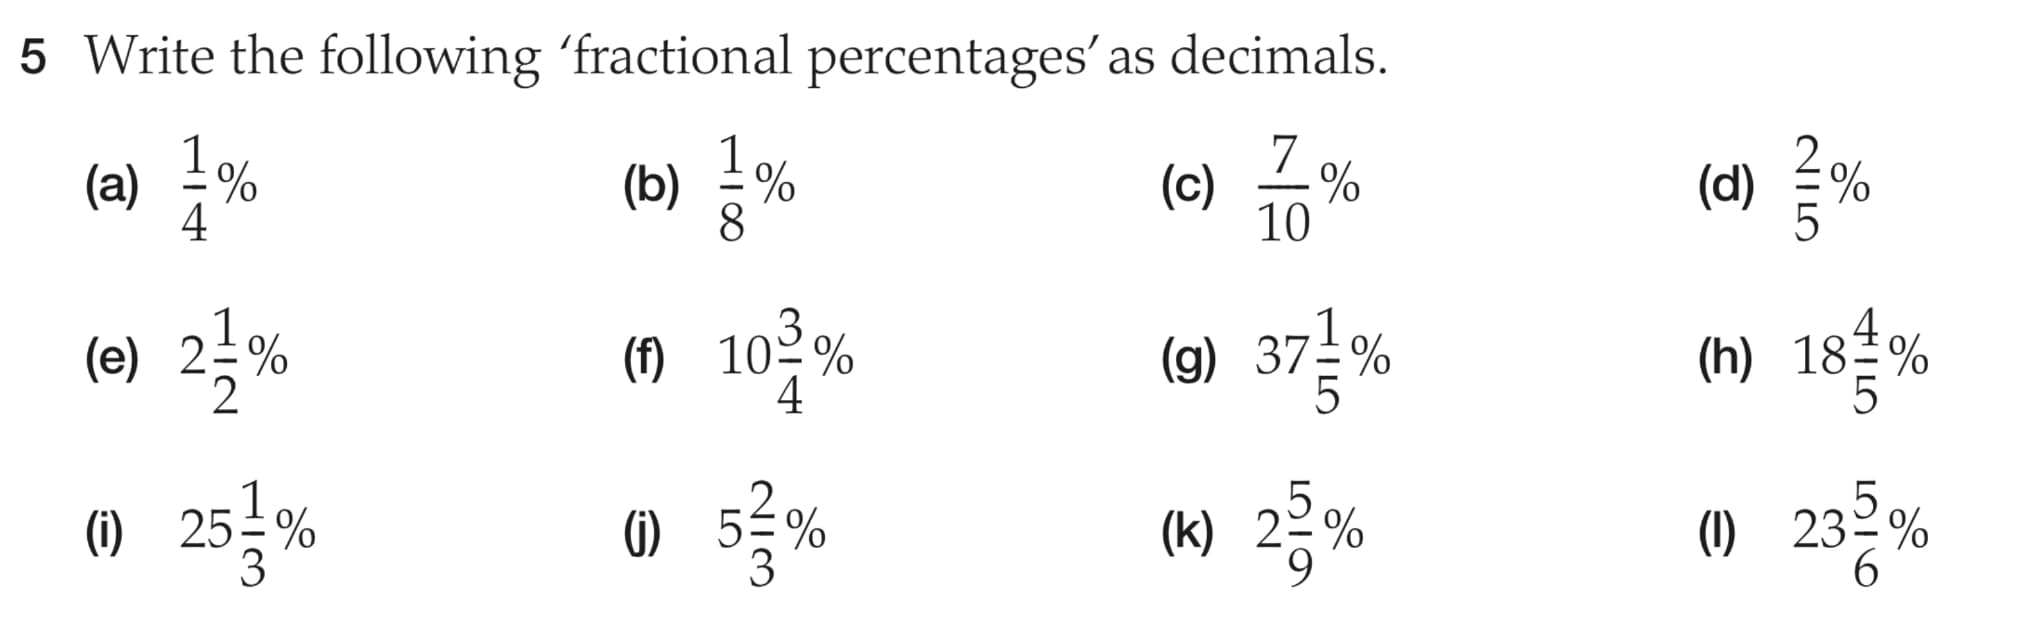 5 Write the following 'fractional percentages' as decimals
(a)
%
(b)
%
(c)
%
10
371%
2-90
(d) 90
(h) 18 %
(1) 232%
(e)
23%
() 10-90
(g)
25 %
(j)
55%
(k)
